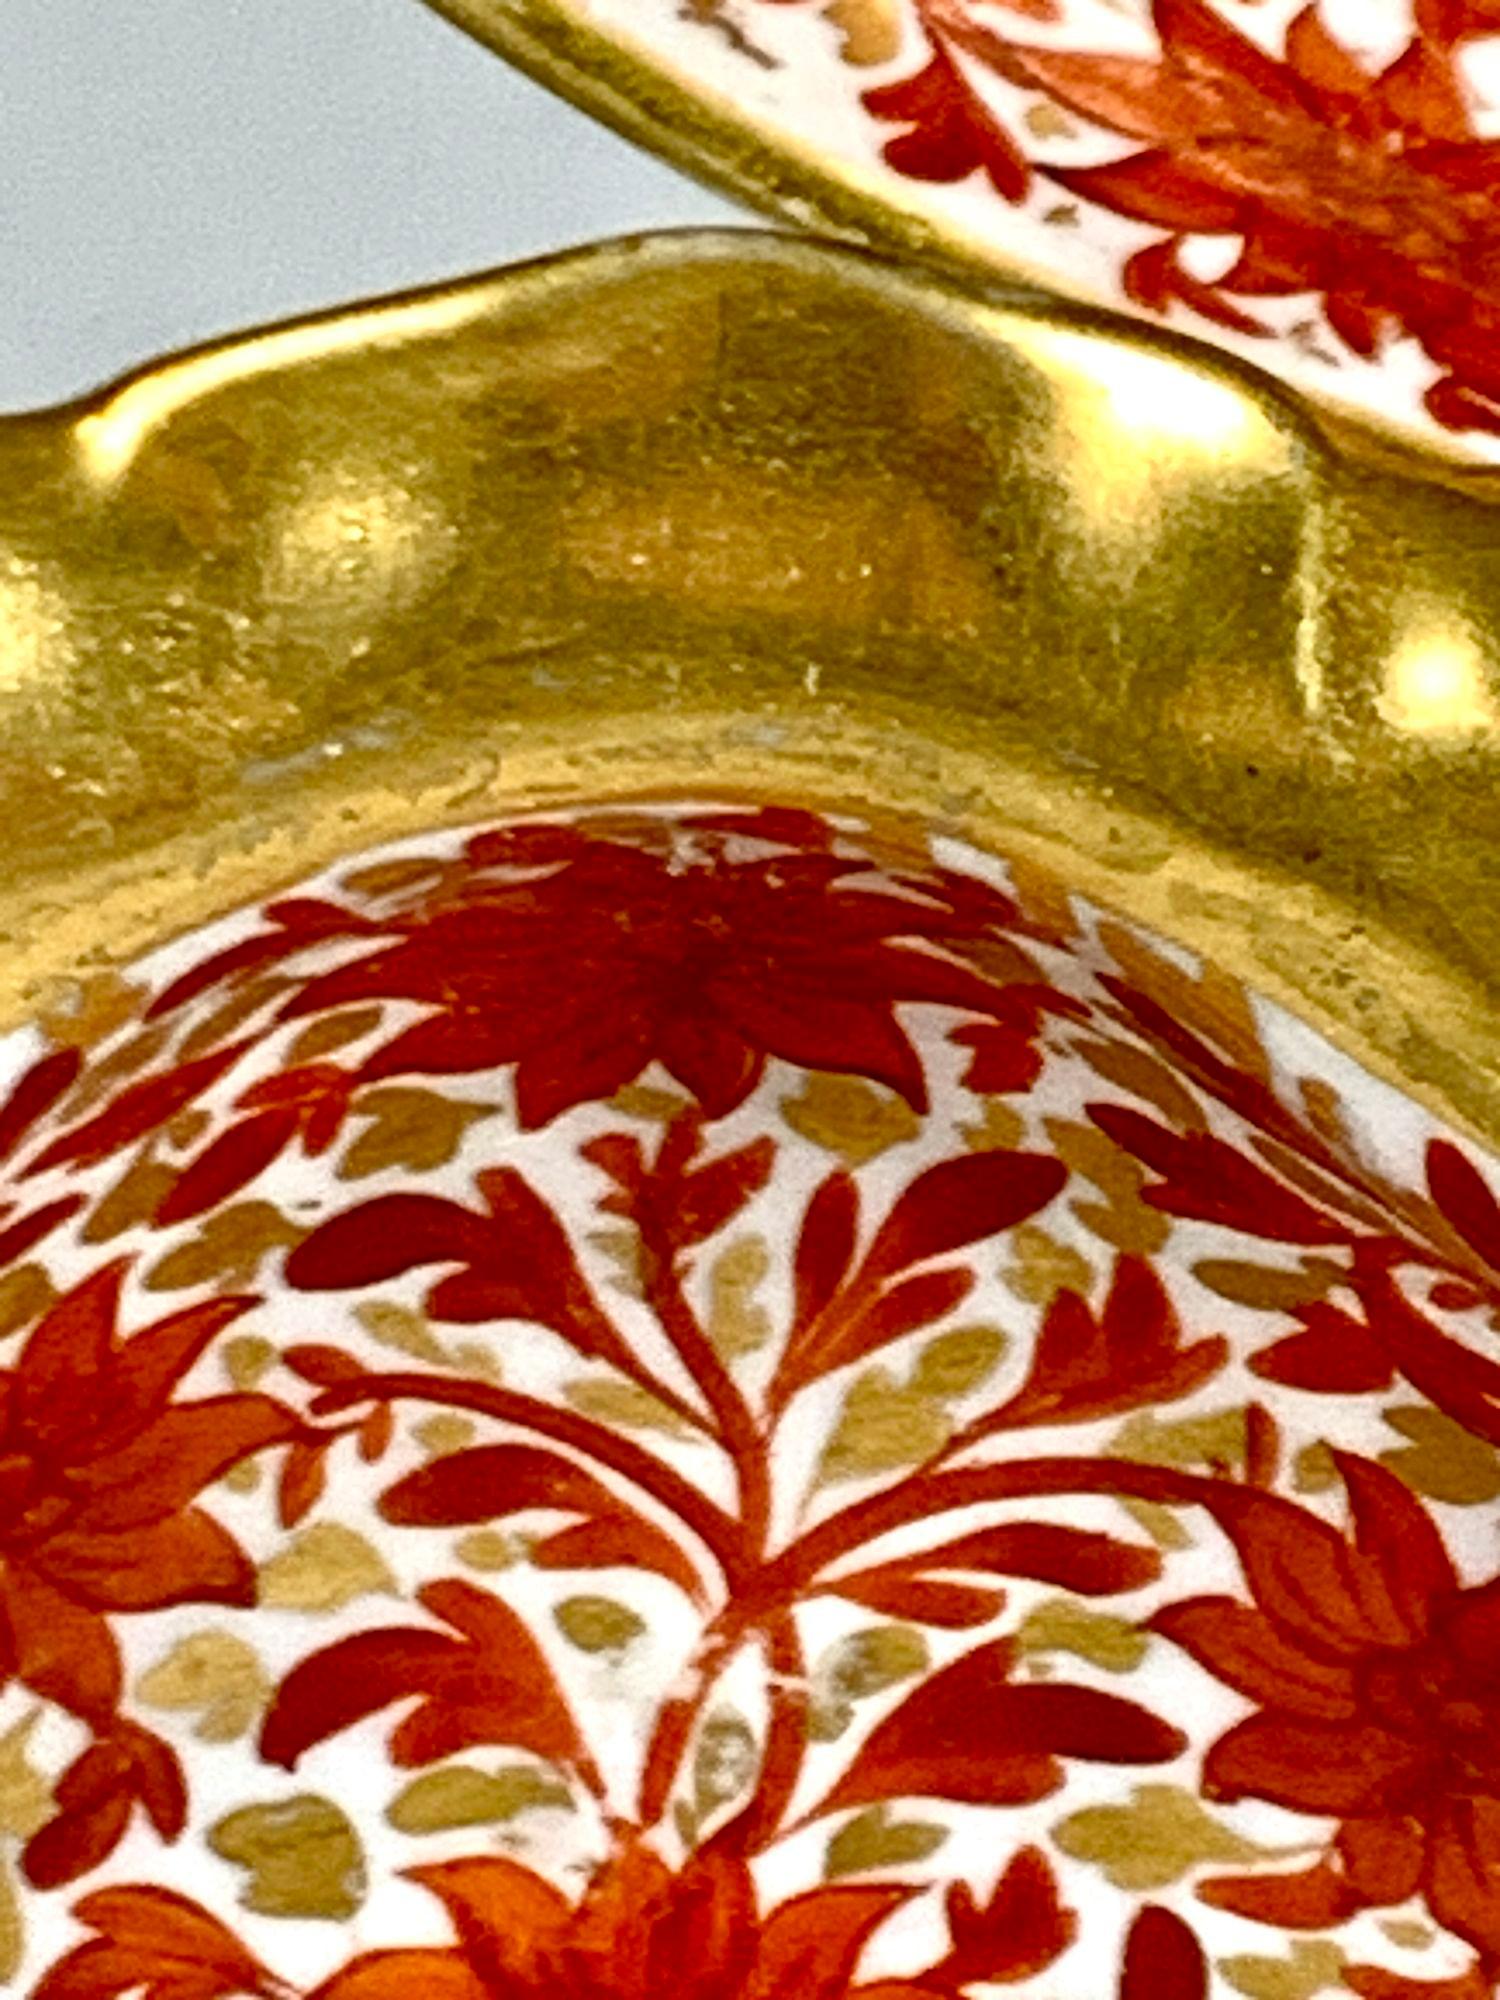 19th Century Three Red Chrysanthemum Pattern Coalport Porcelain Dishes England Circa 1810